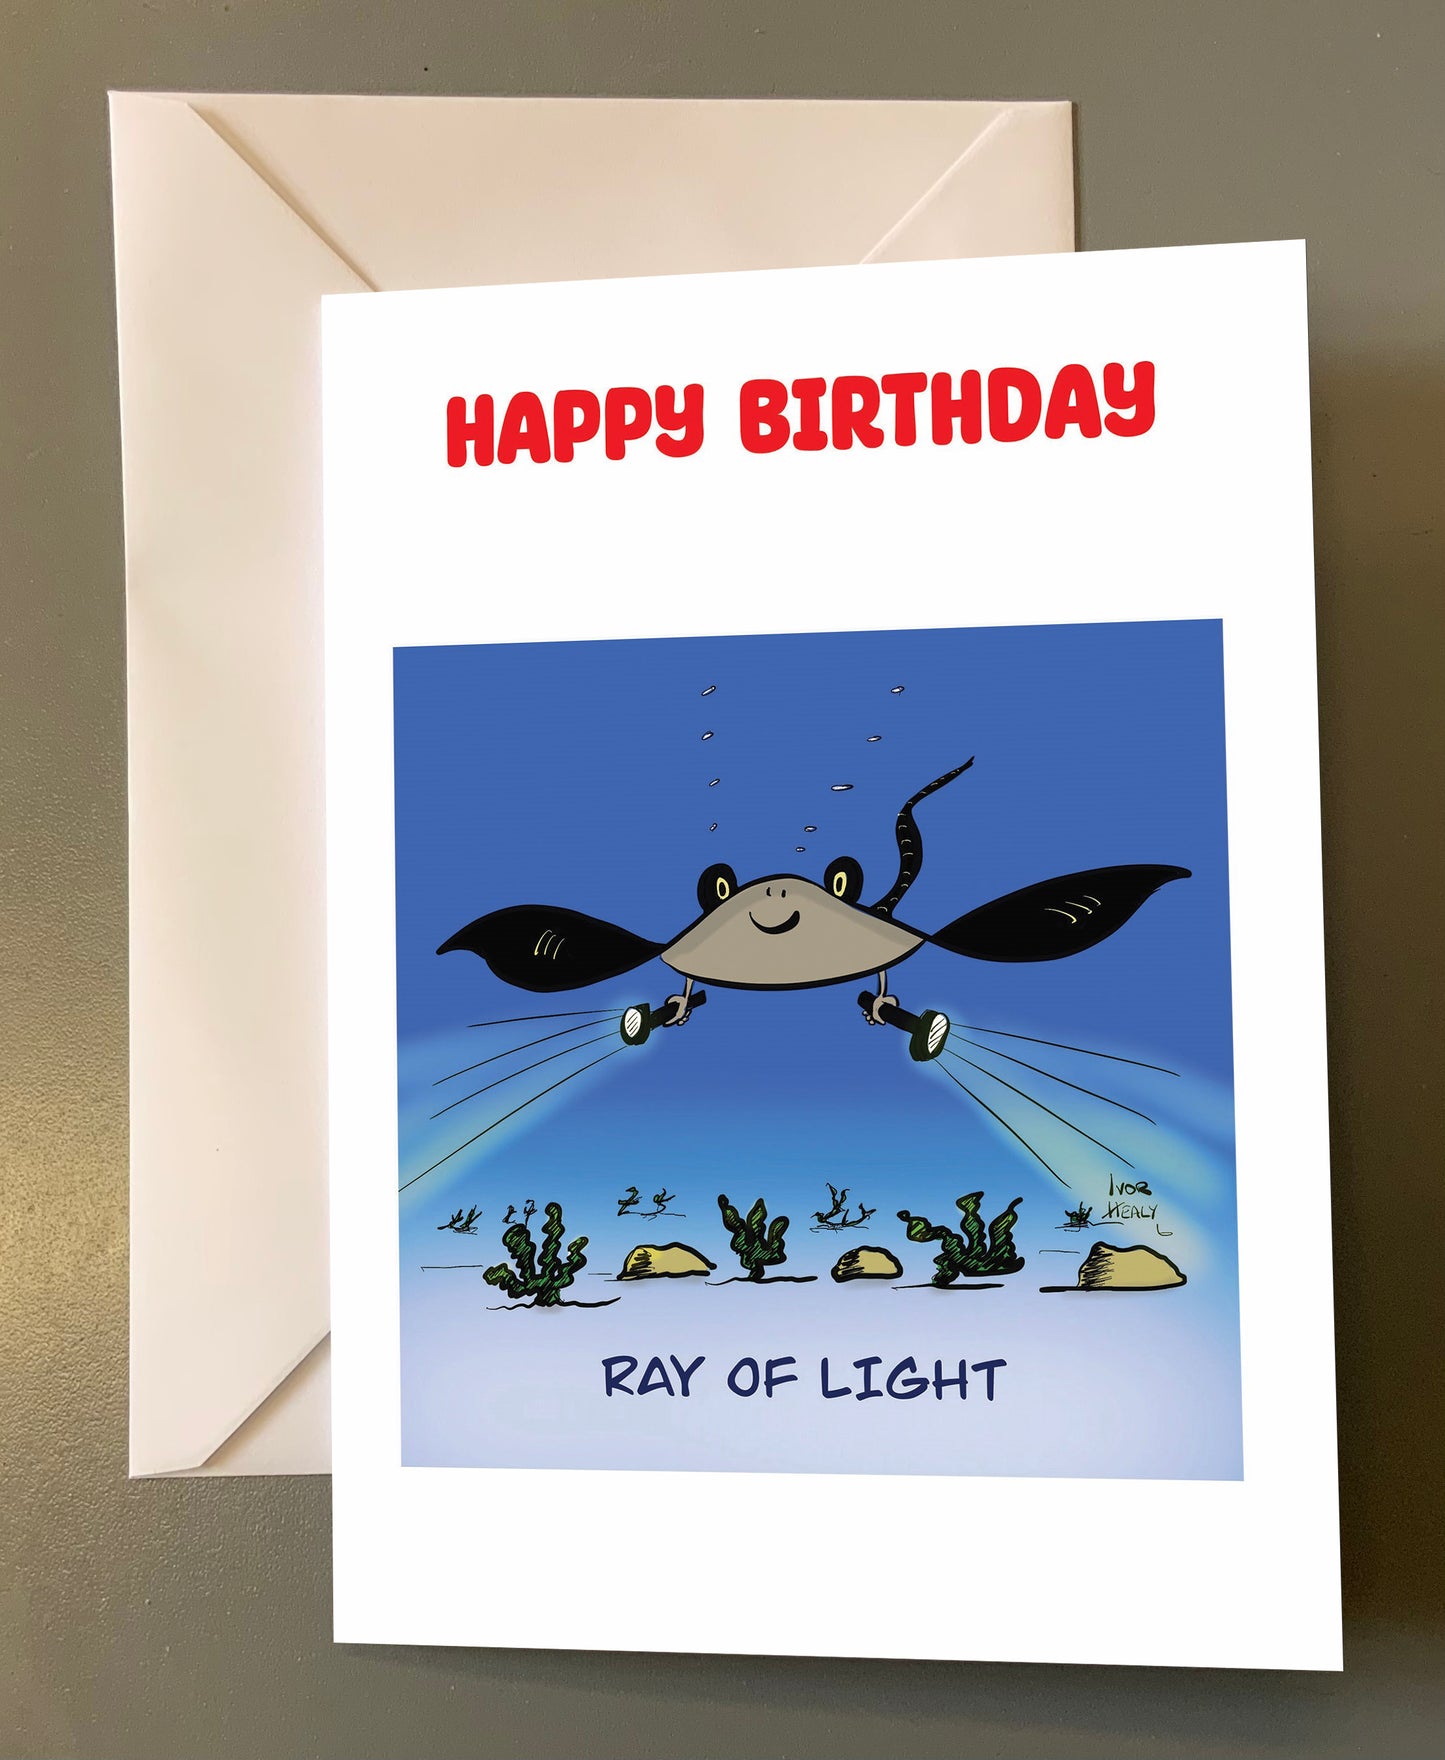 Ray of Light Birthday card